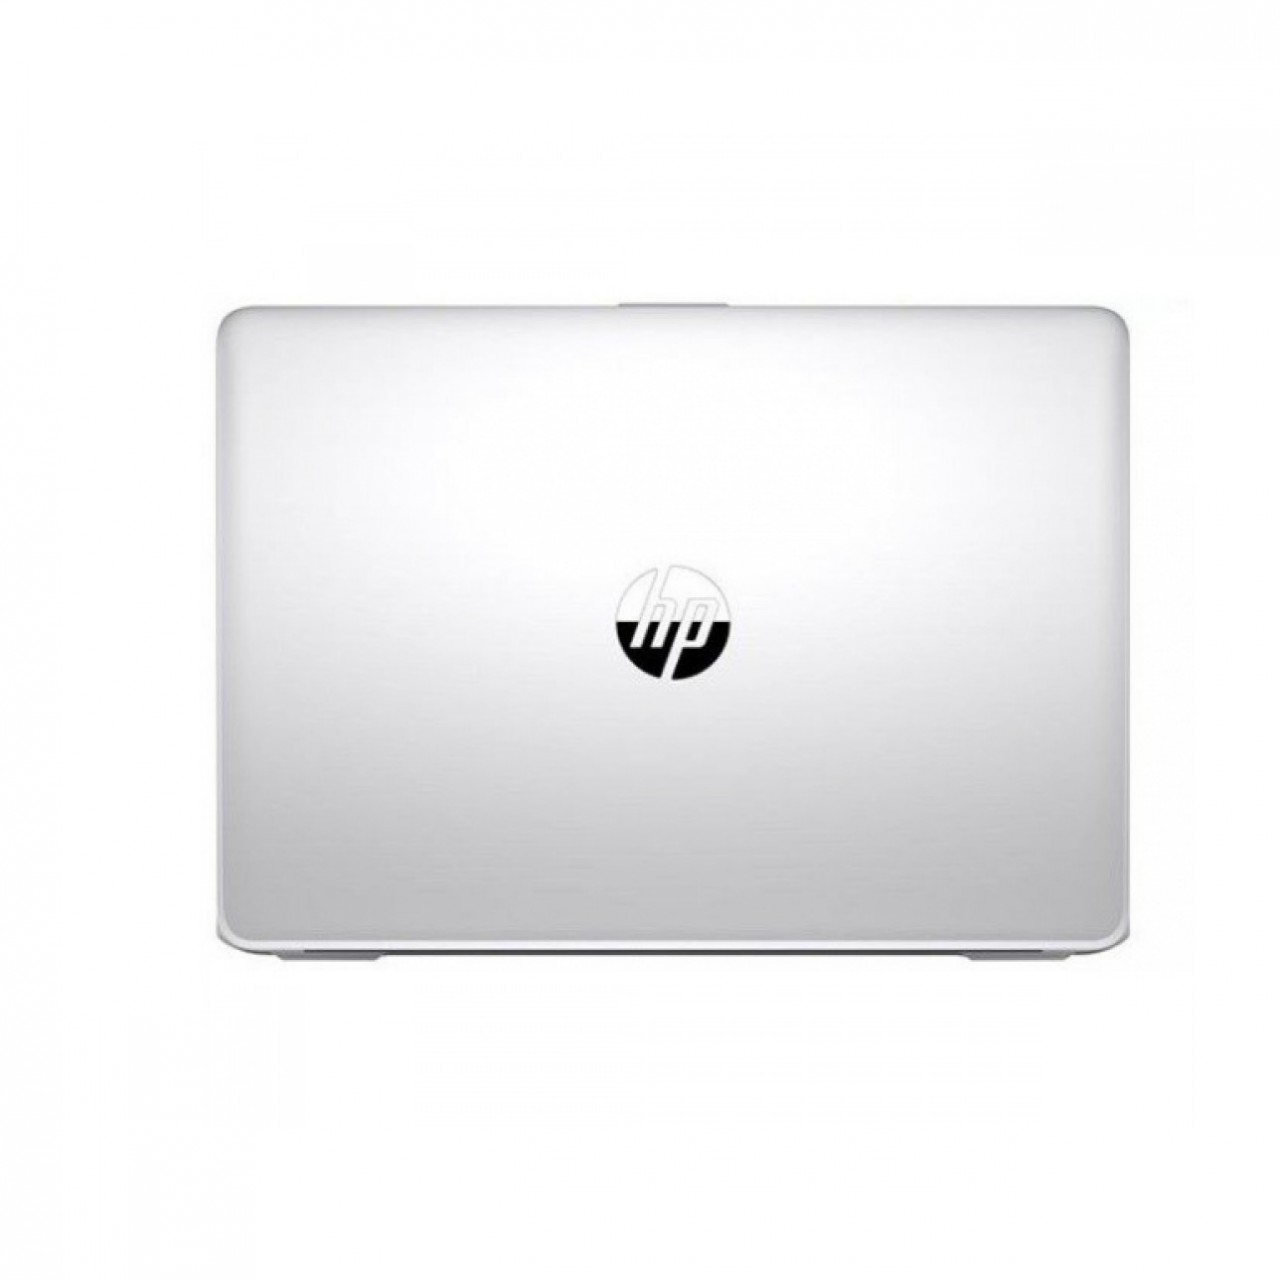 HP 15 DA0001TX Notebook Laptop - 8 GB - 1 TB - Core i7 - 8th Generation - Graphics 4GB Nvidia MX130